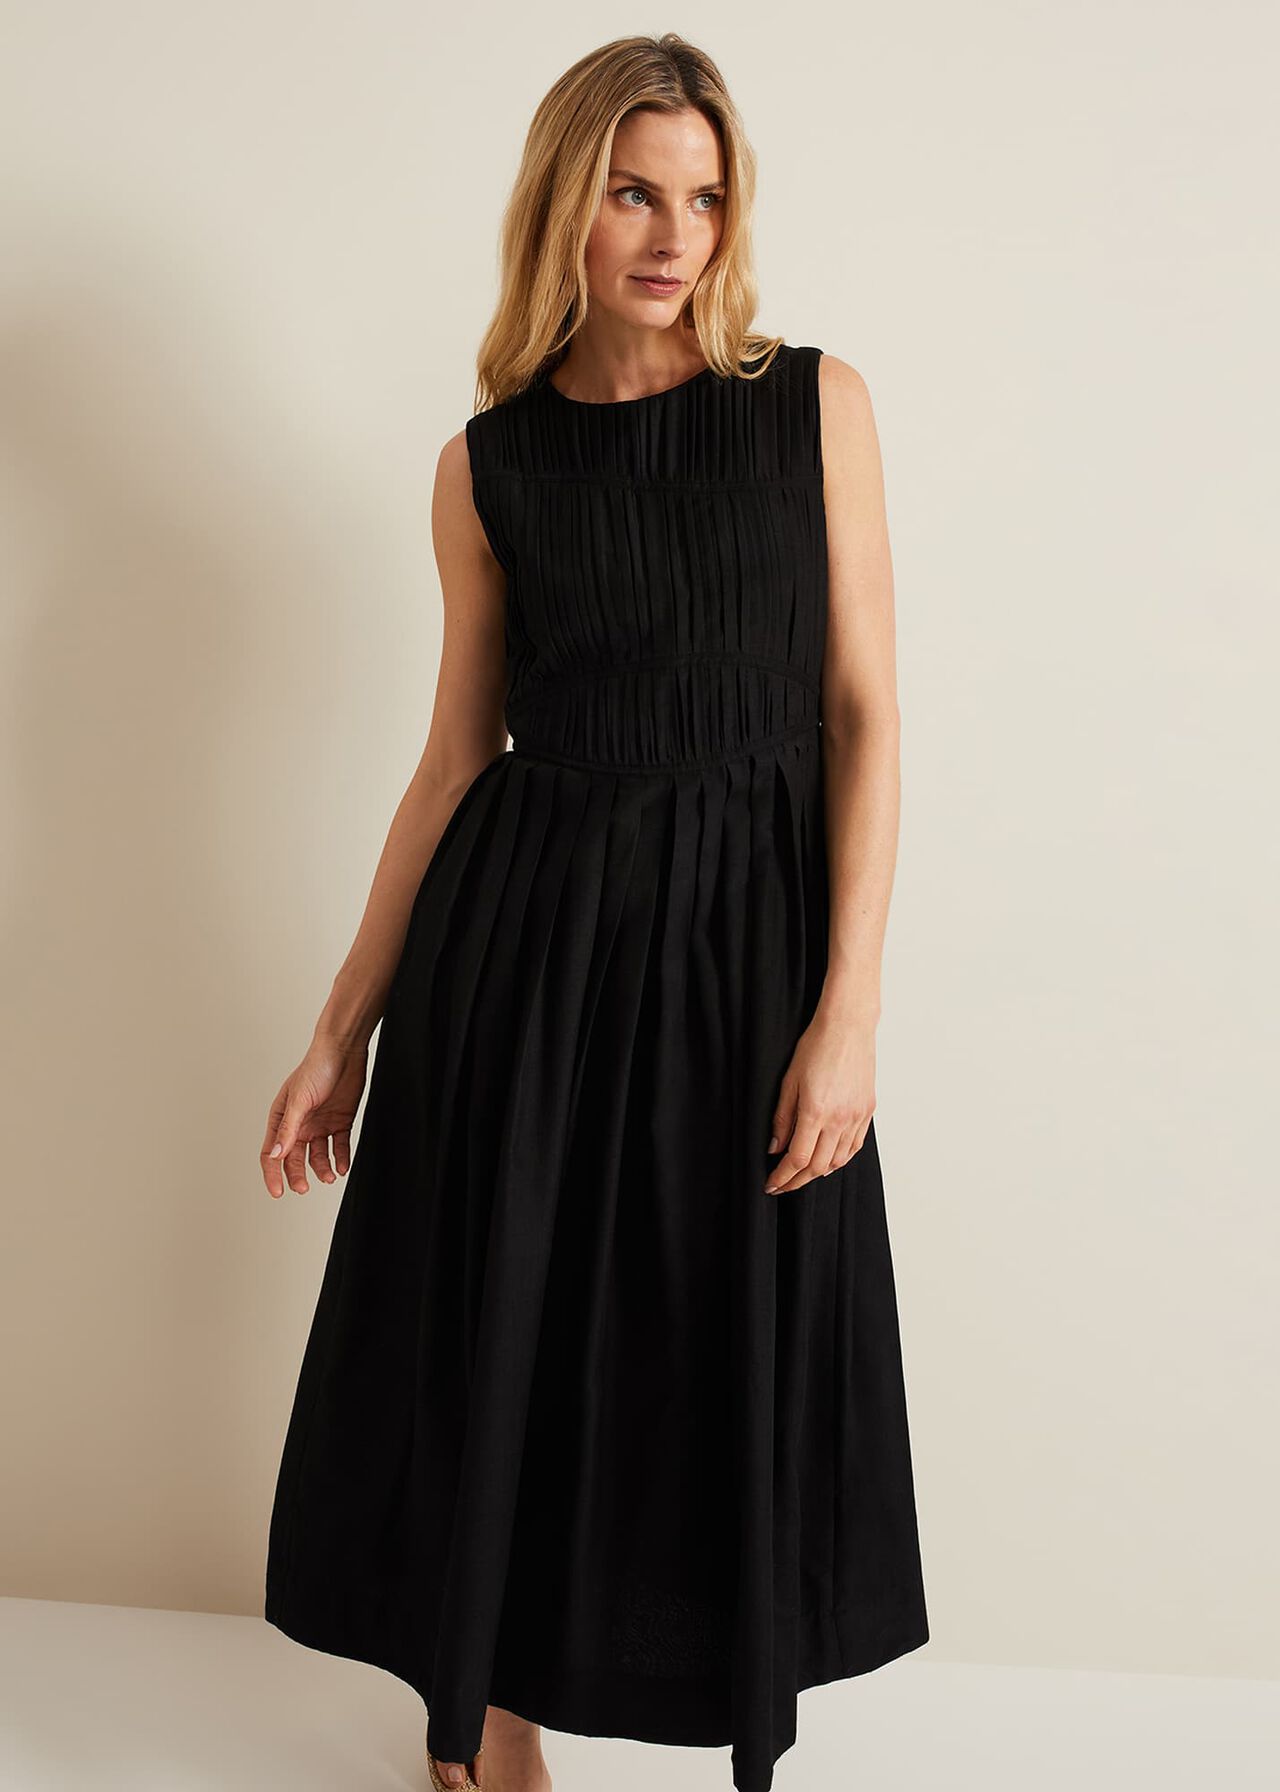 Nala Black Bodice Mini Dress